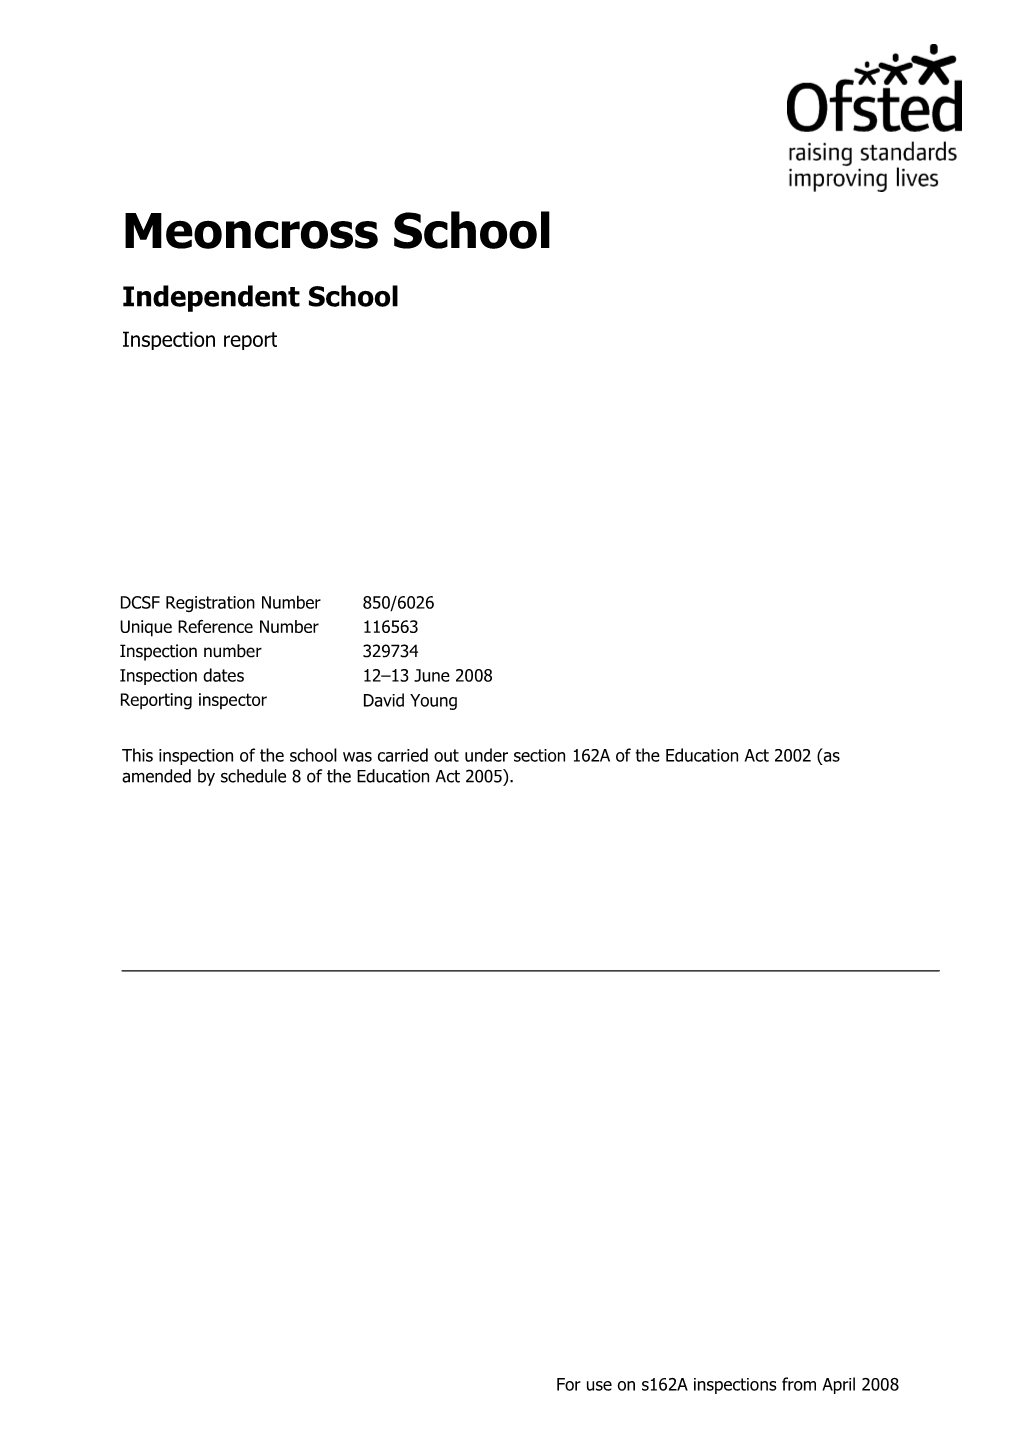 Meoncross School Independent School Inspection Report